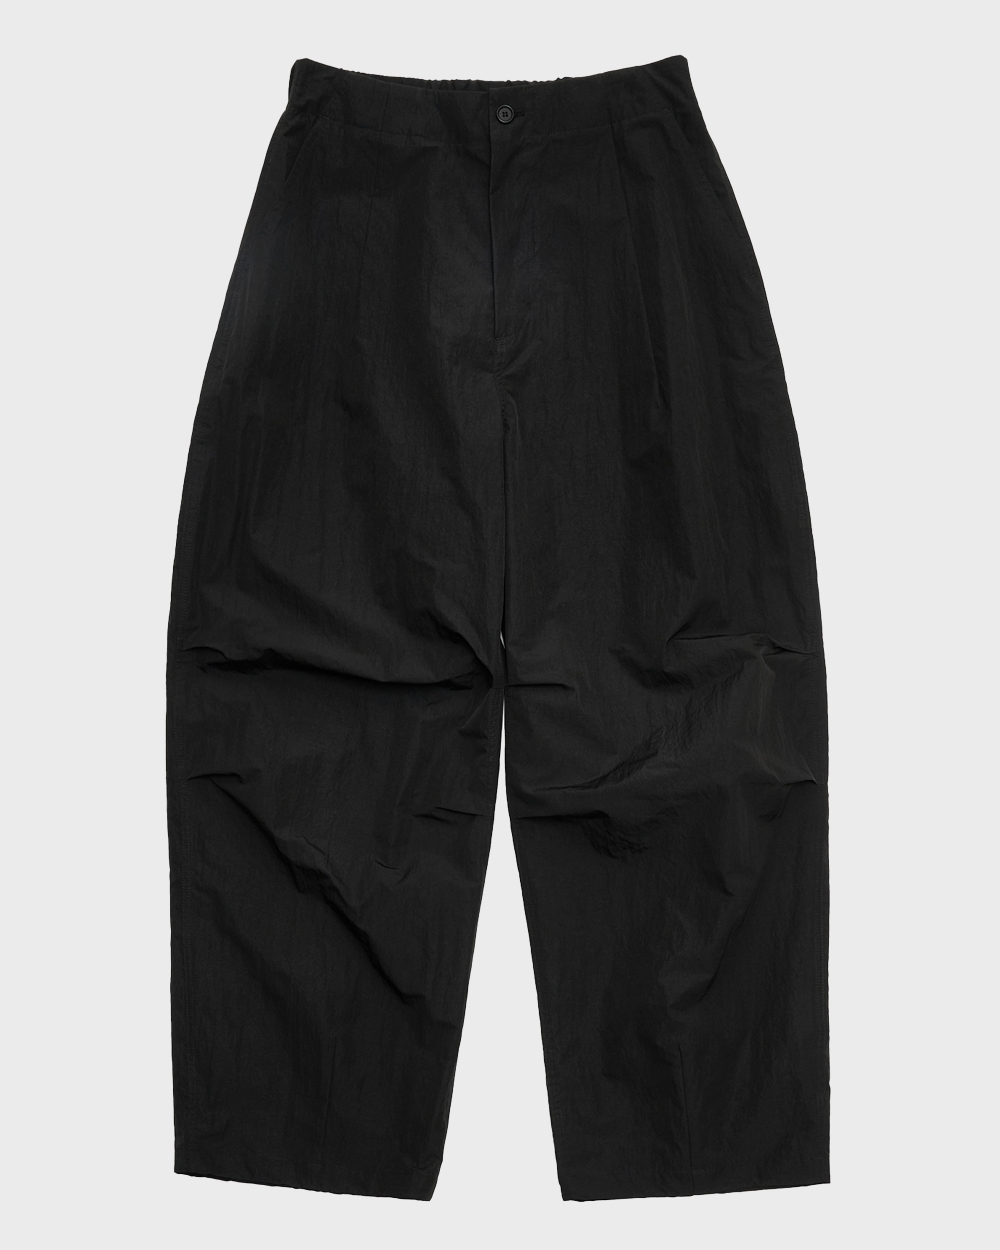 Ripstop Fatigue Pants (Black)